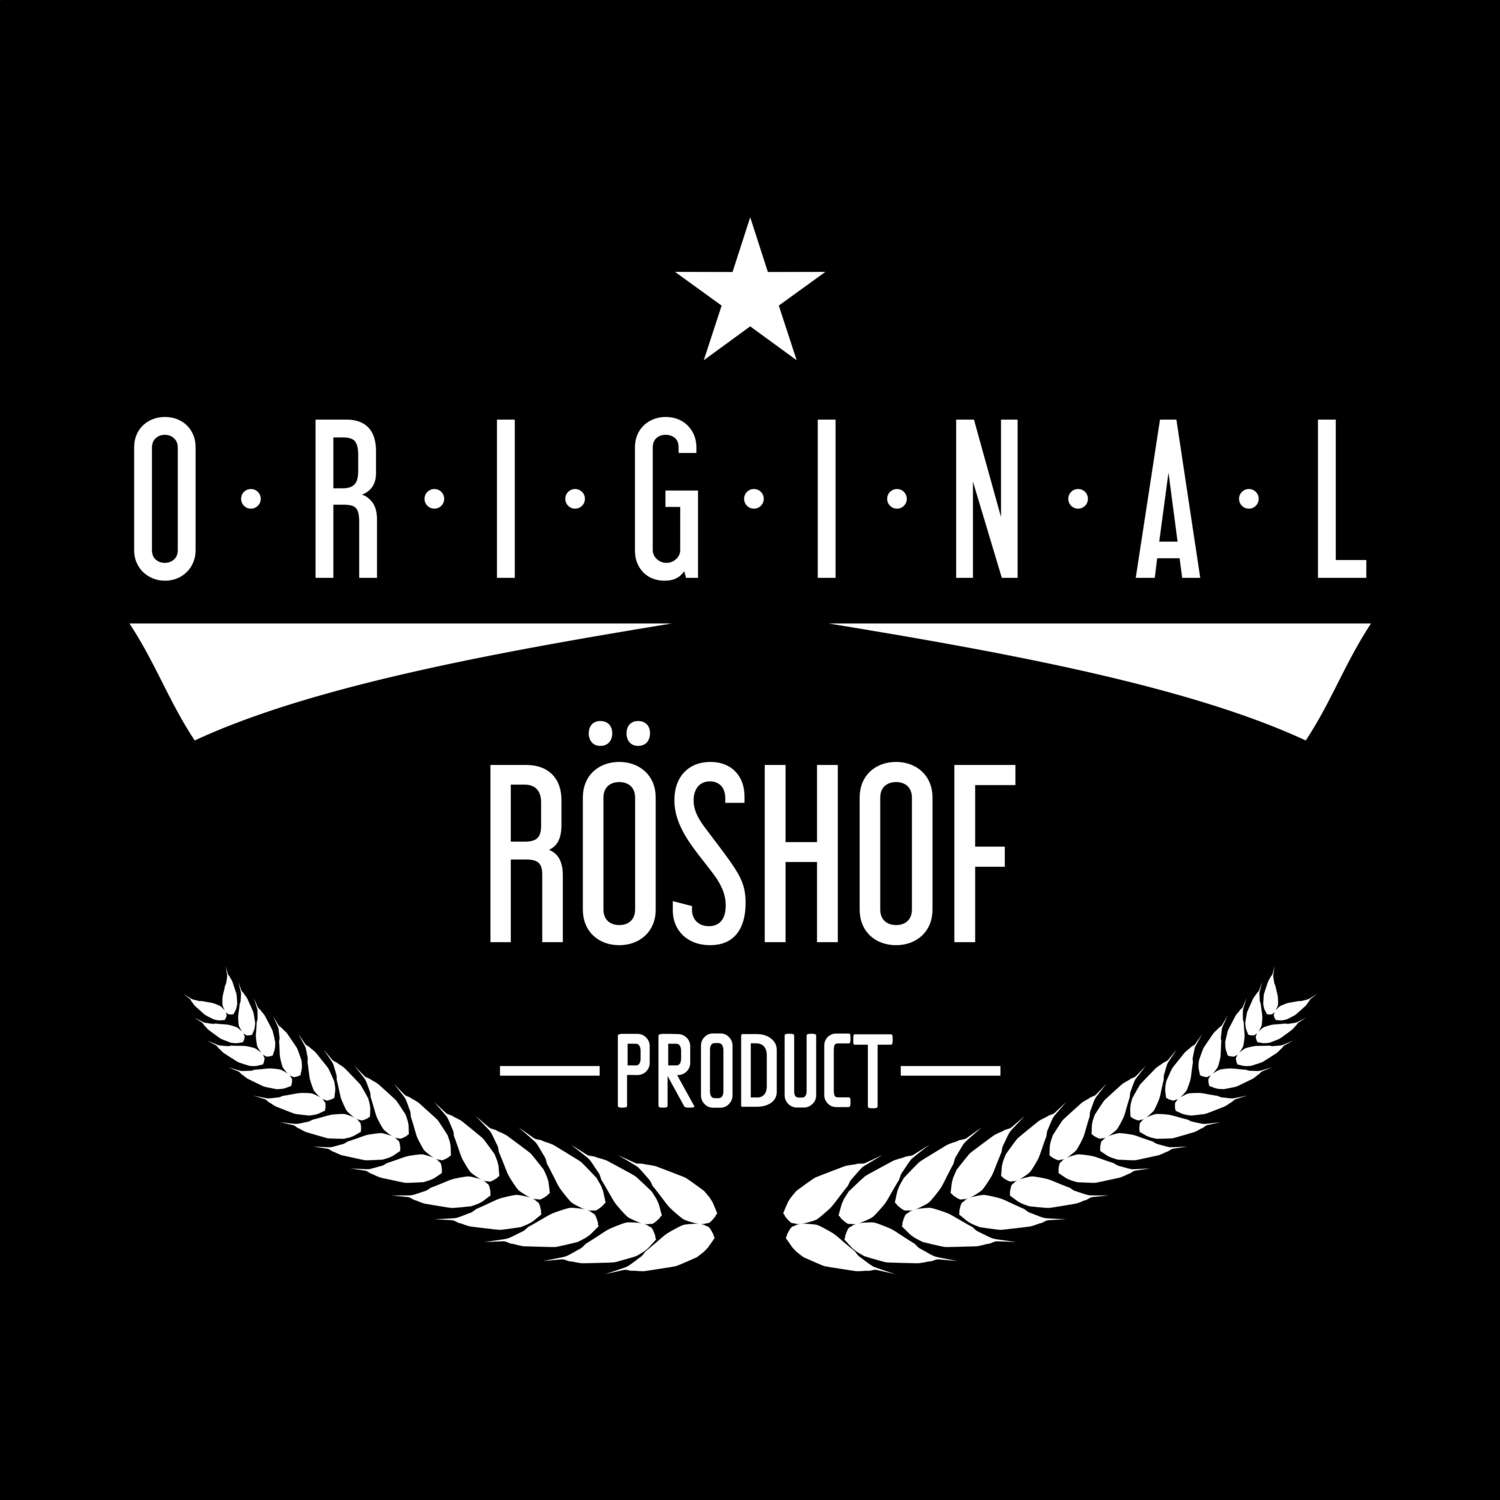 Röshof T-Shirt »Original Product«